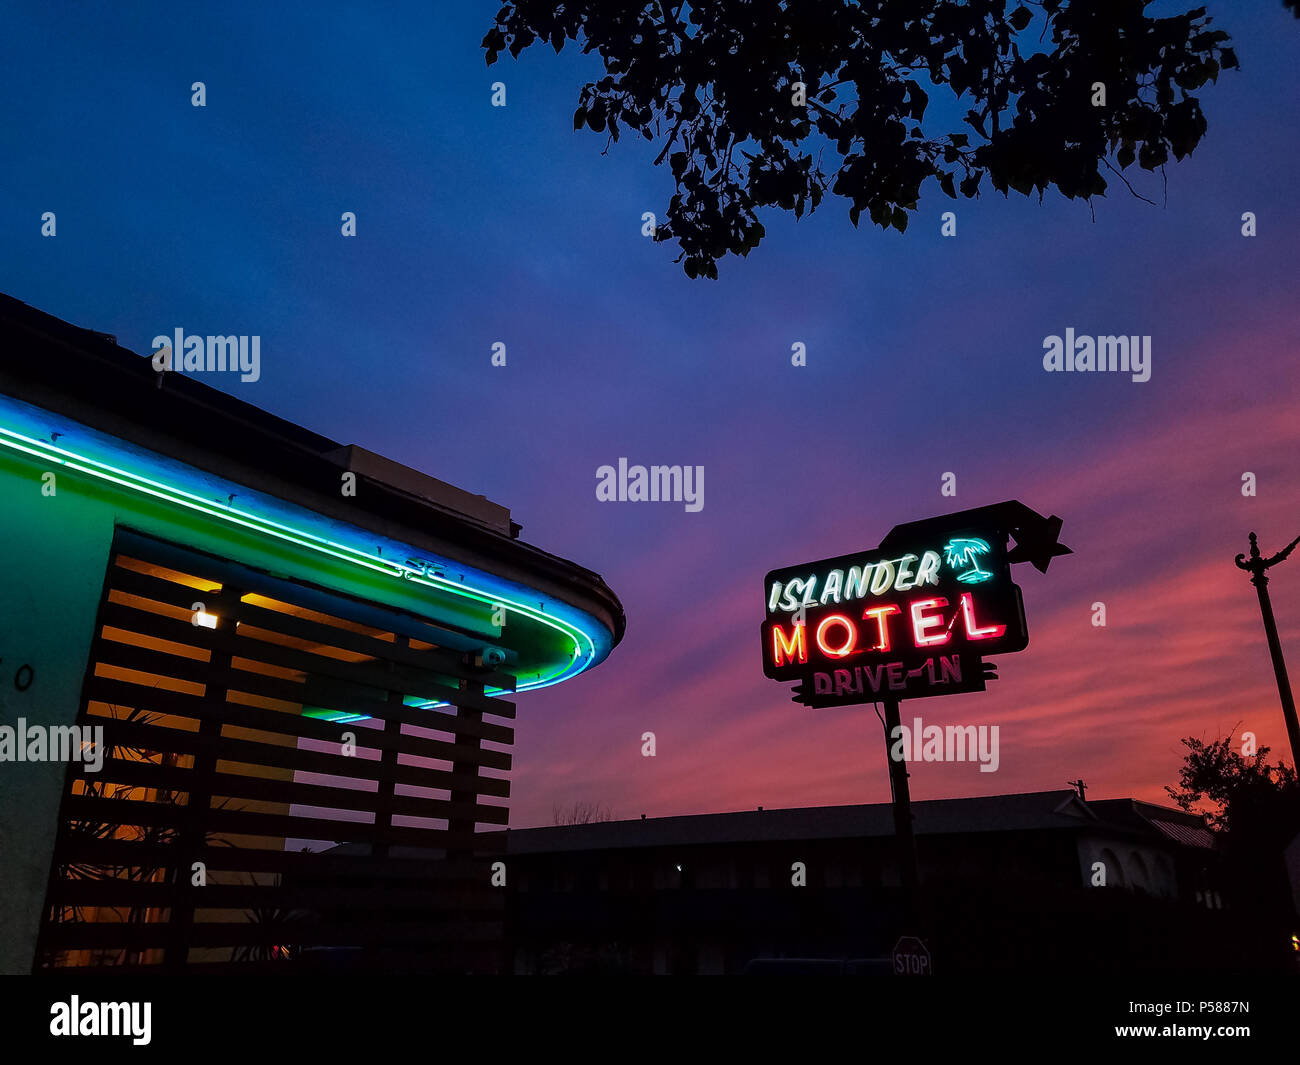 'Islander Motel,' neon sign at dusk, in Los Angeles, California. Stock Photo